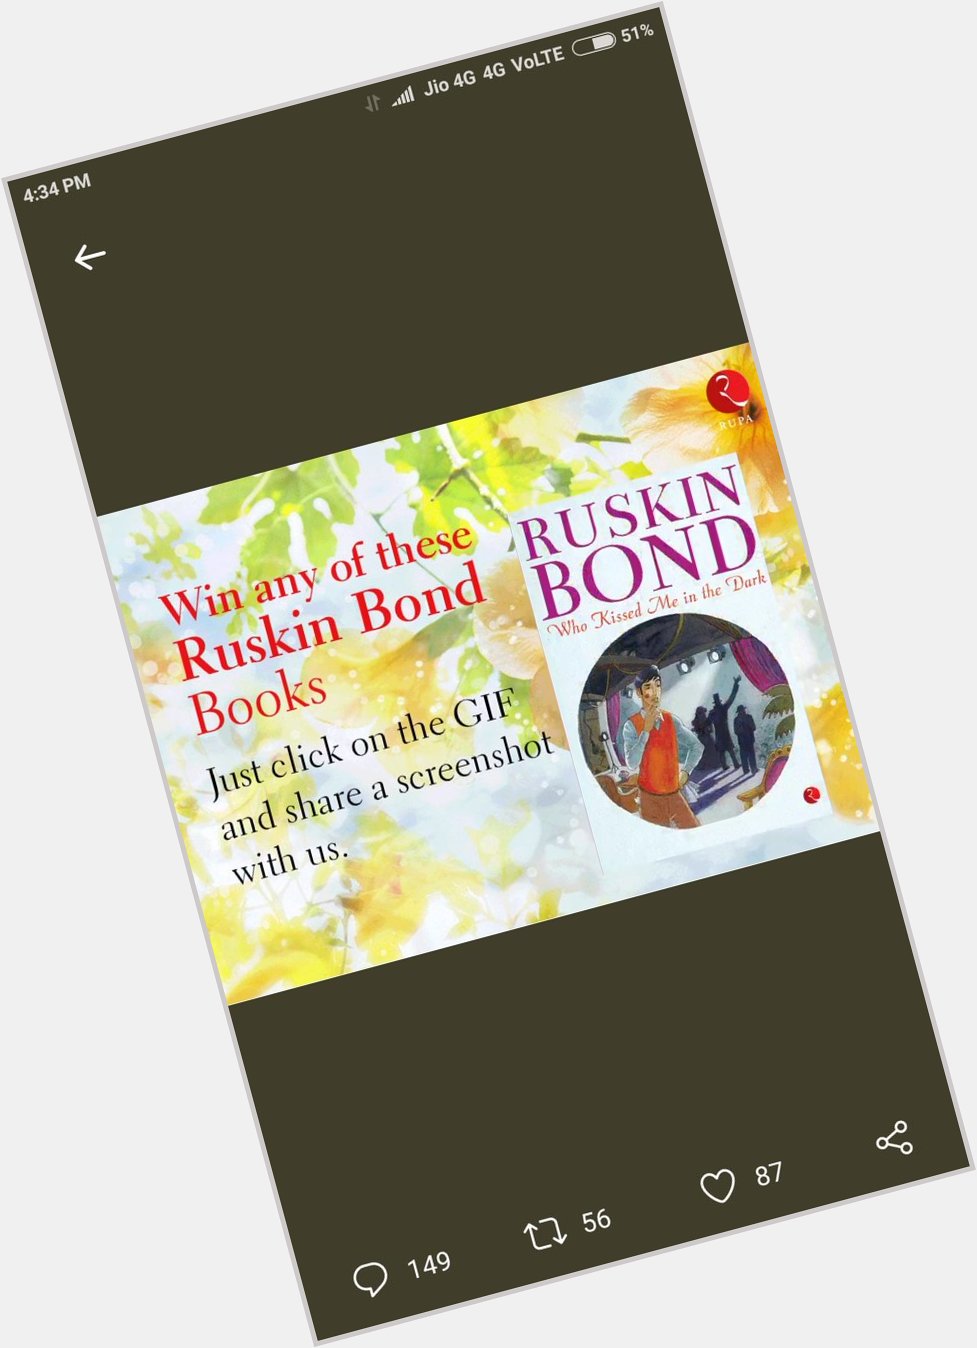  Happy birthday Ruskin Bond! 